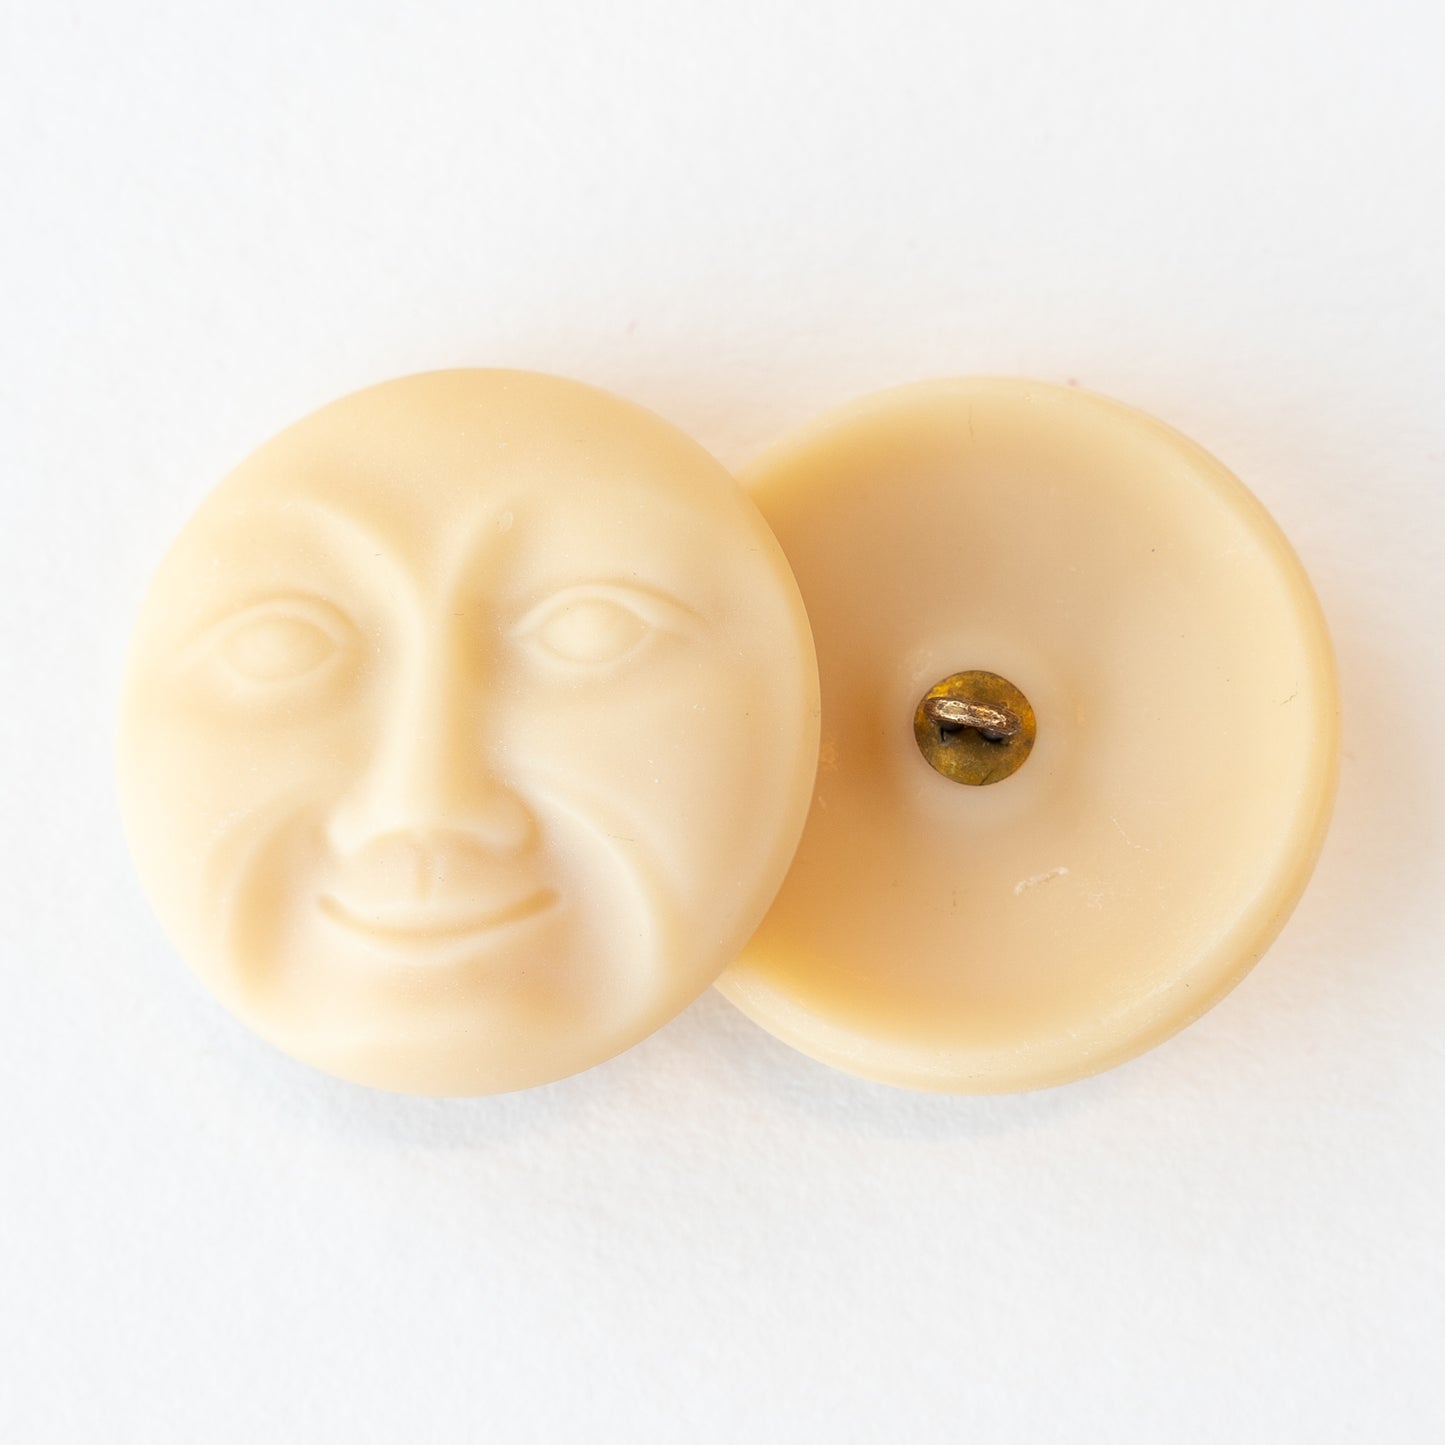 31mm Moon Face Buttons - Bone White Matte - 1 Button